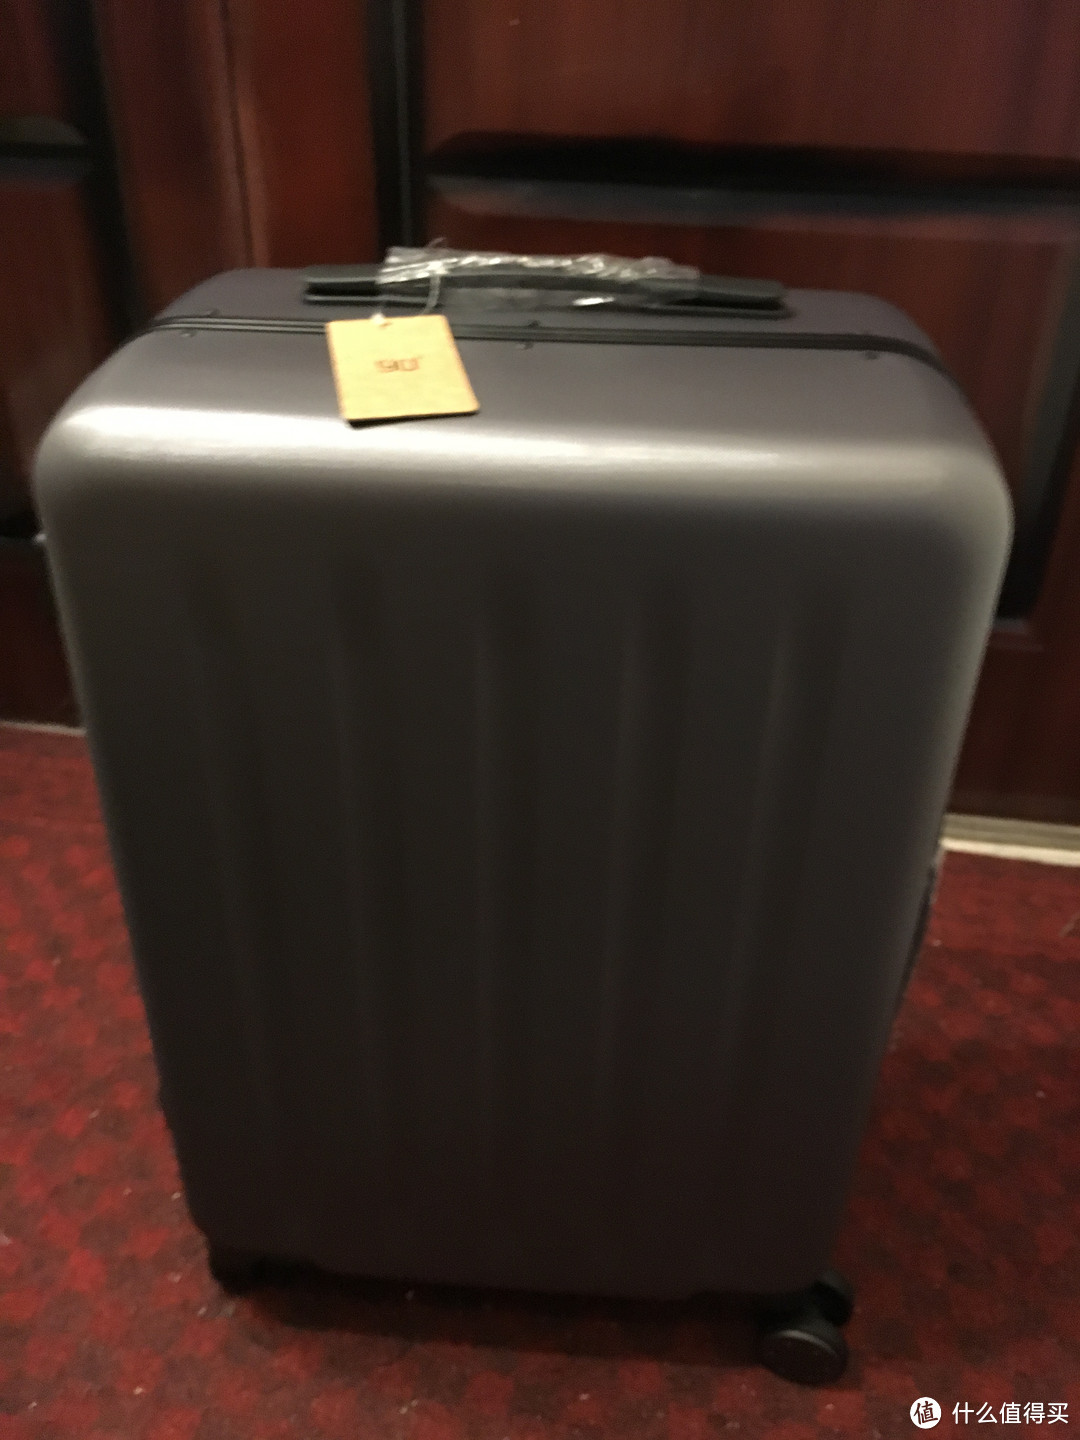 MI 小米 90分铝框旅行箱 开箱 & 网红ito、新秀丽、小米 旅行箱 多图对比